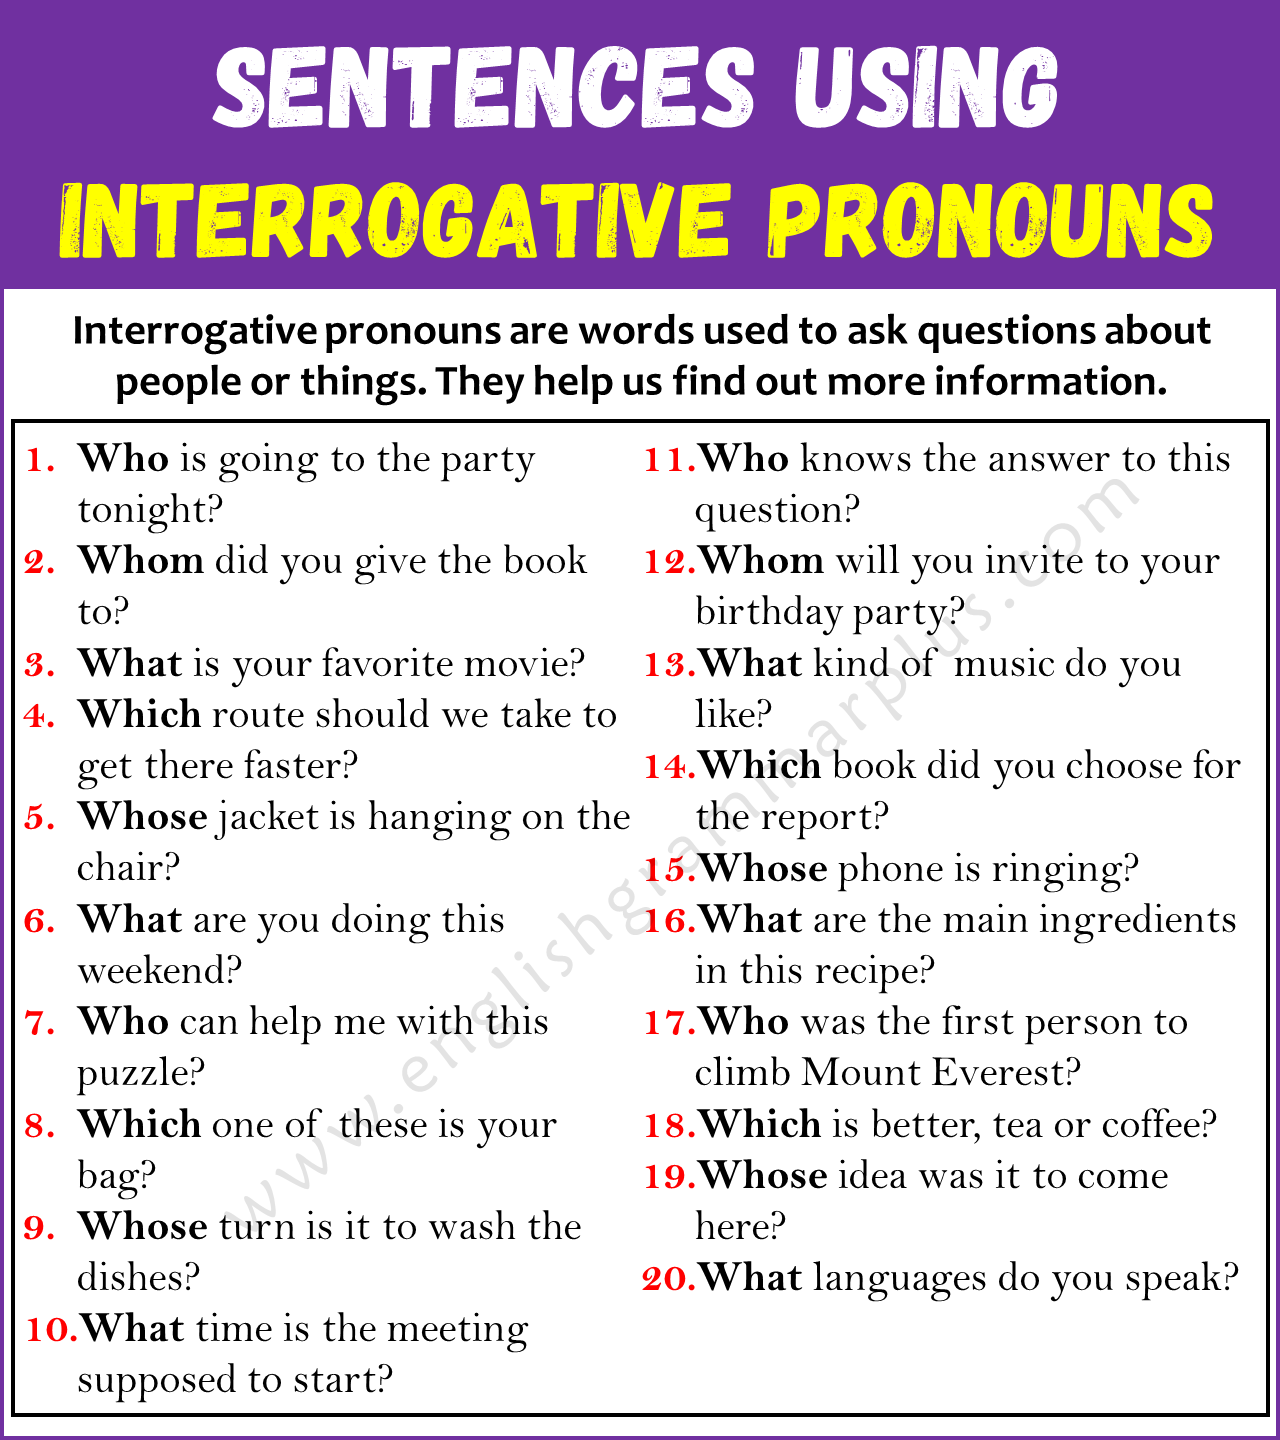 Sentences Using Interrogative Pronouns